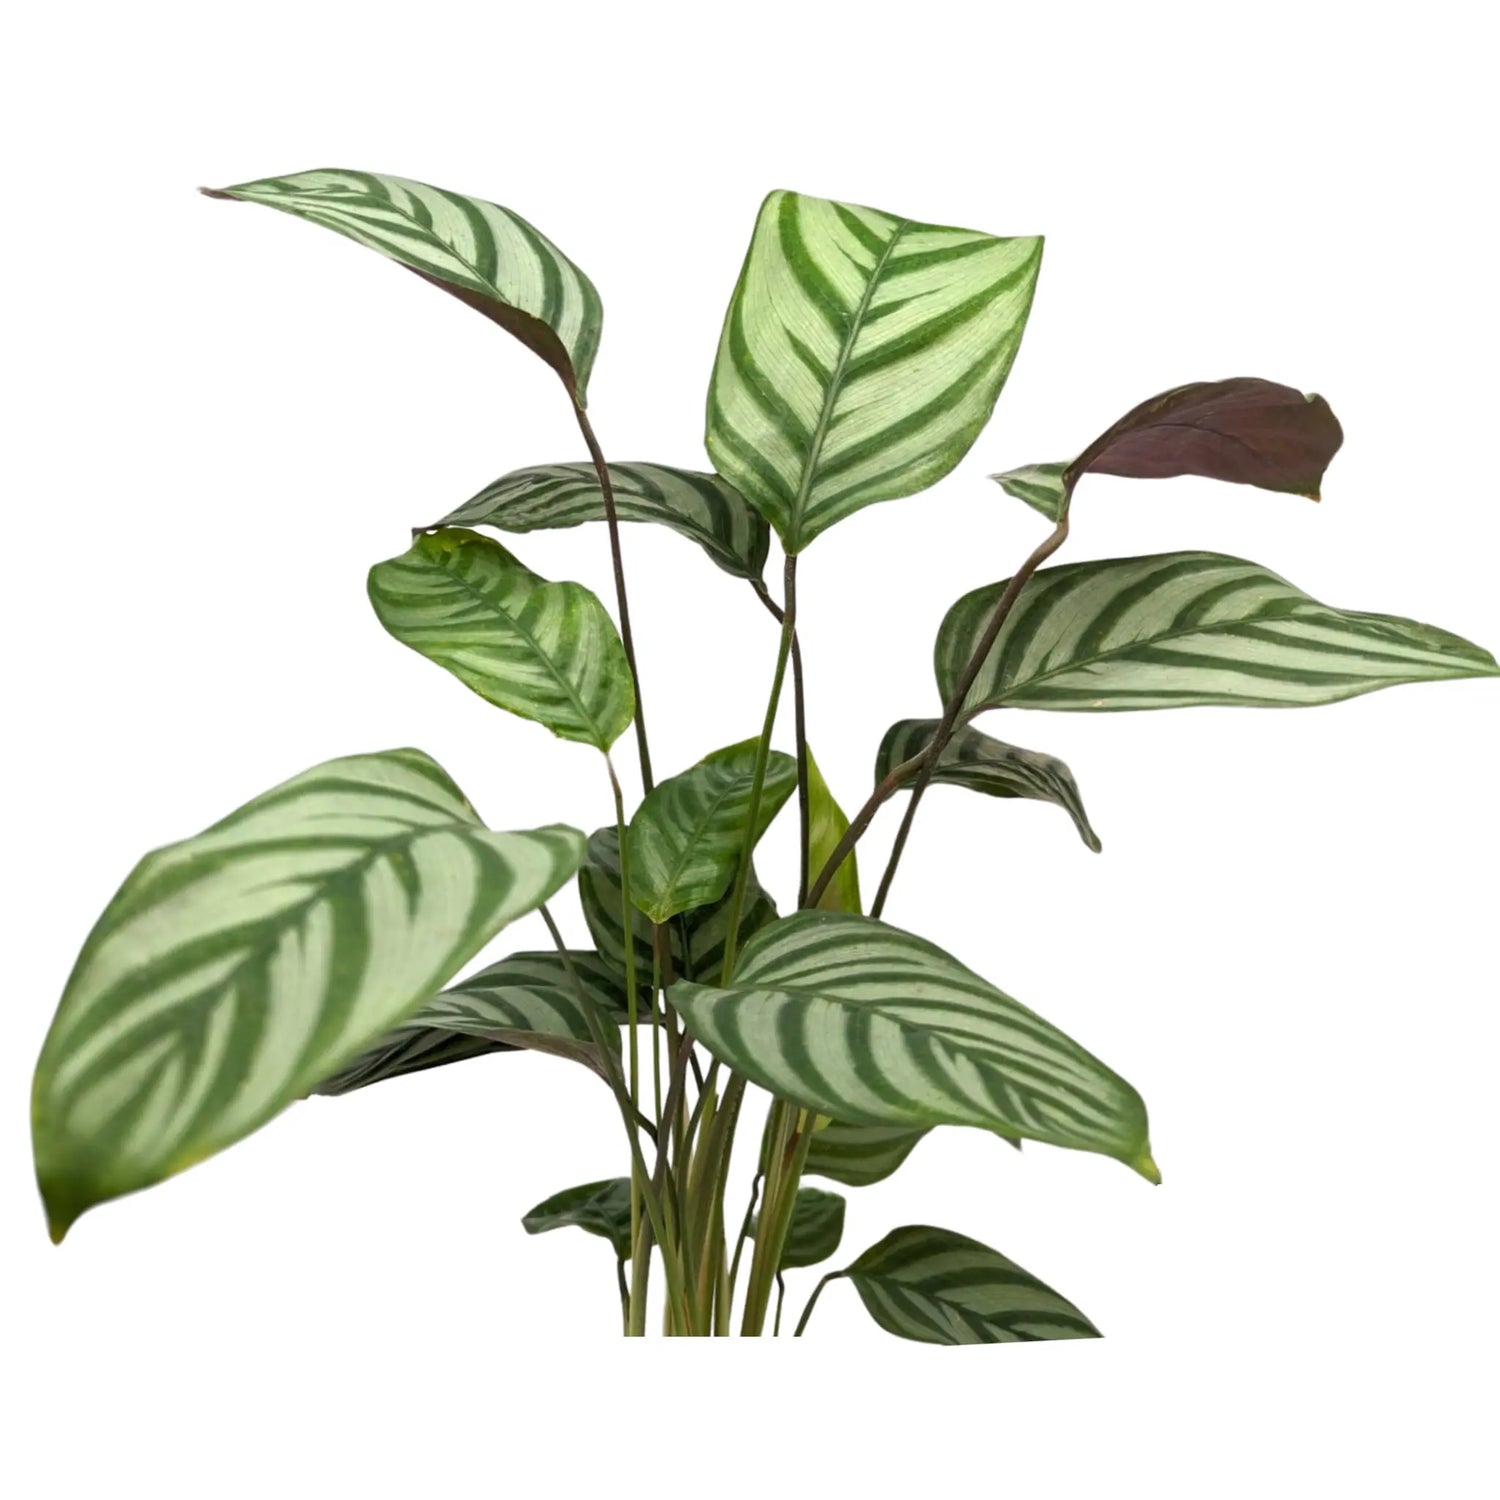 Ctenanthe Compactstar - Prayer plant Leaf Culture